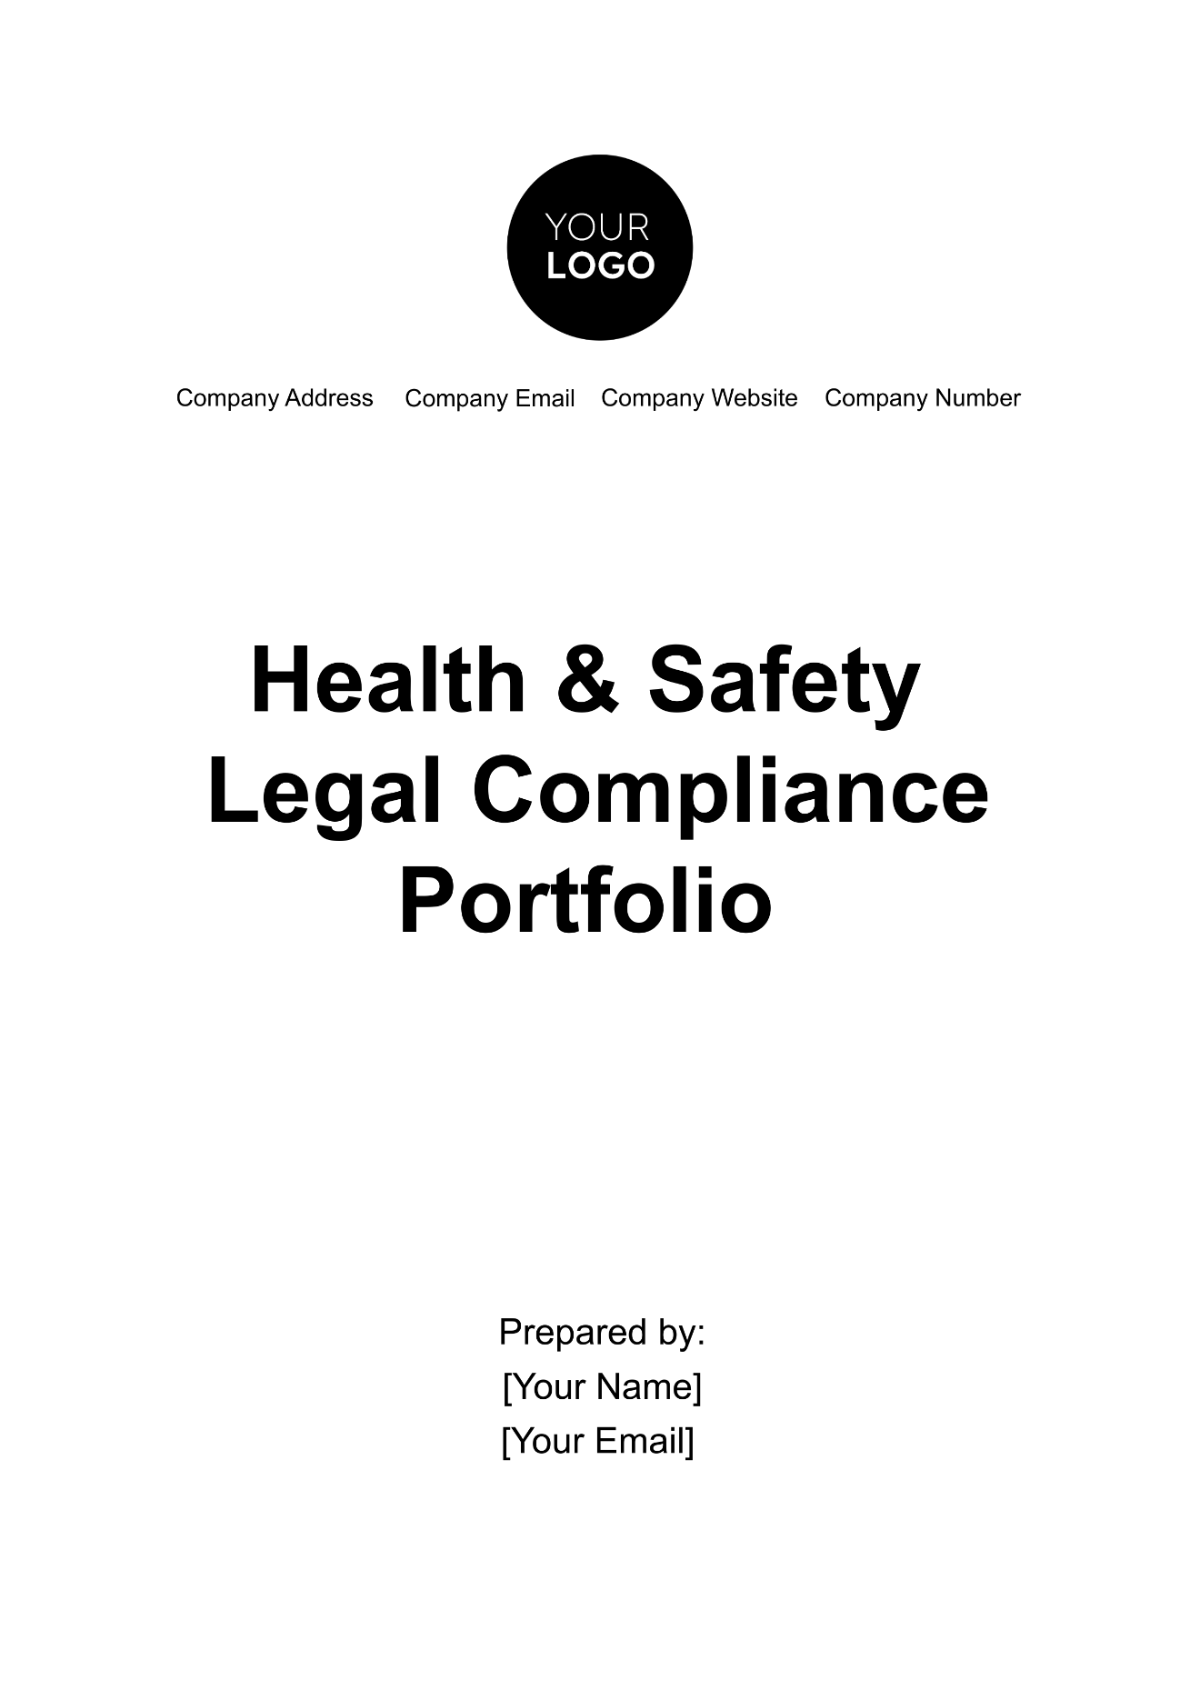 Health & Safety Legal Compliance Portfolio Template